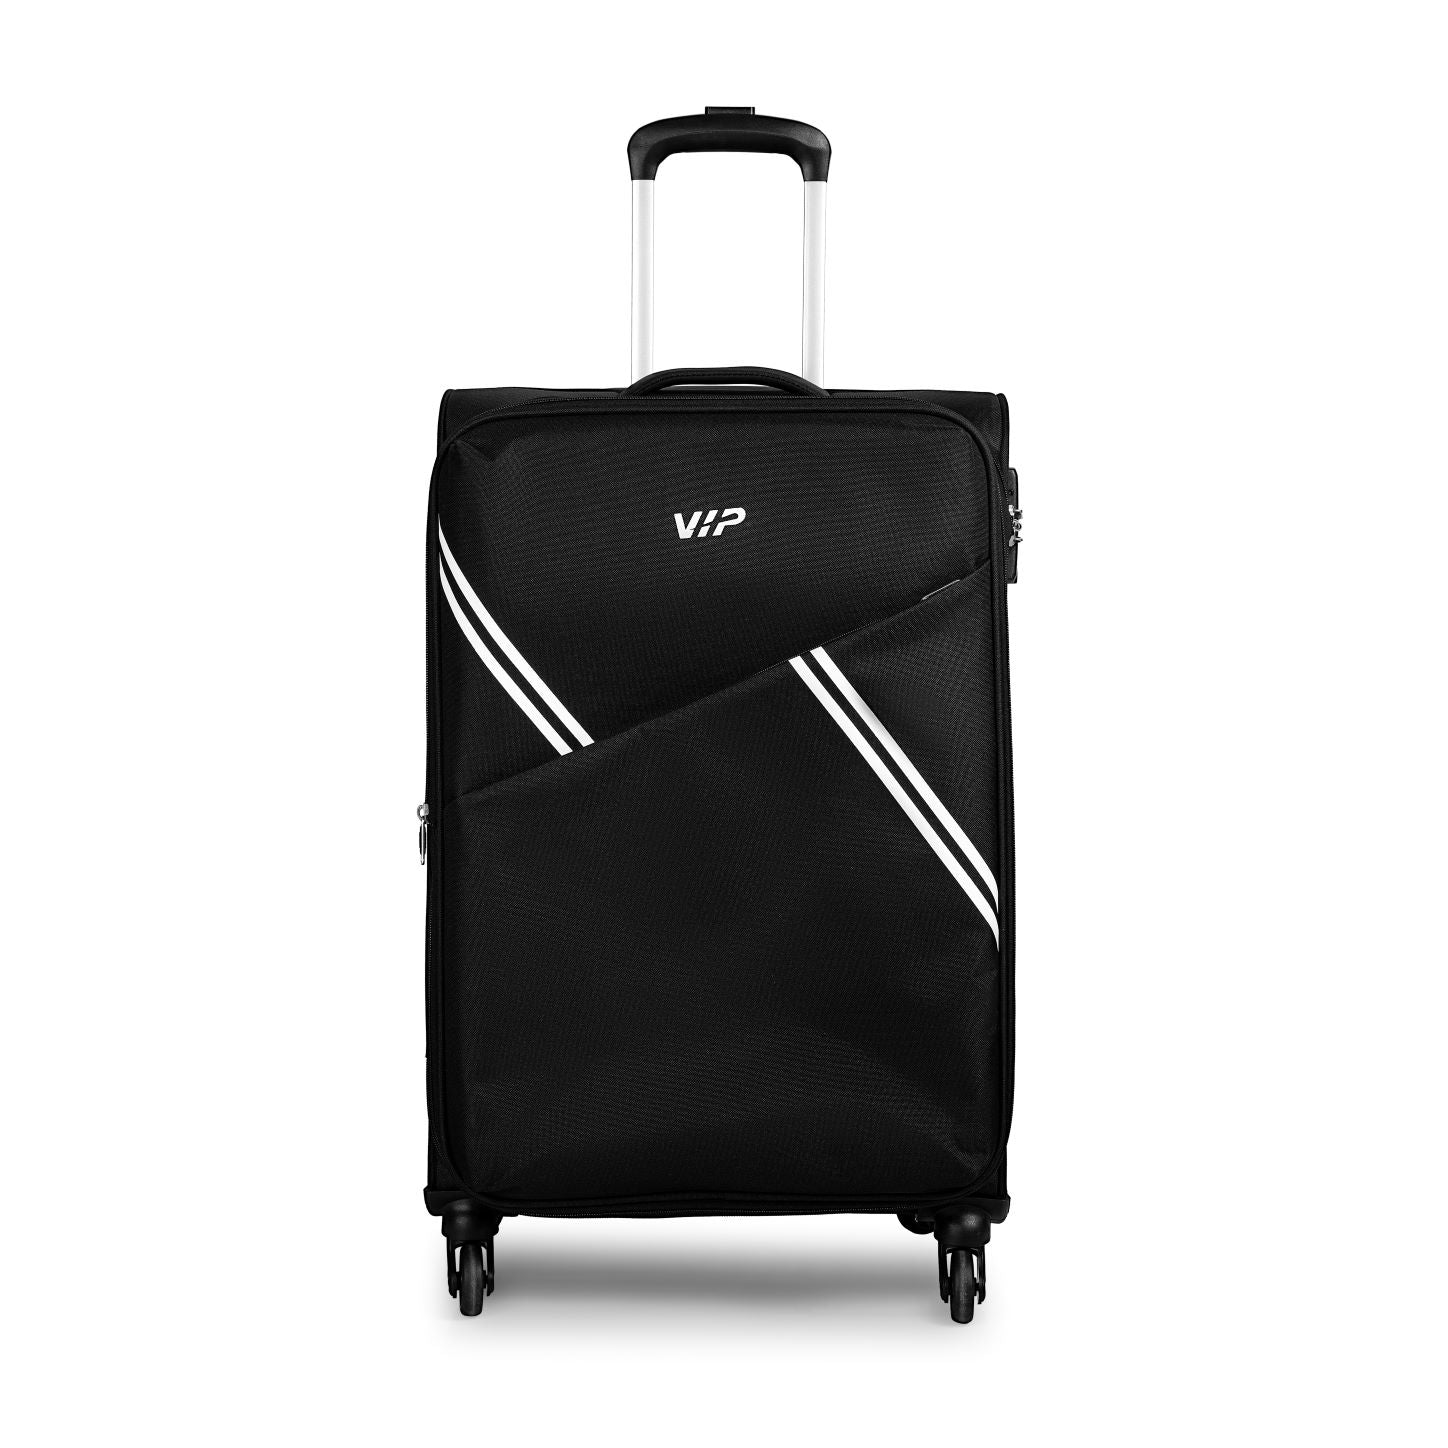 VIP Verona 59cm 4 Wheel Cabin Luggage Trolley Black